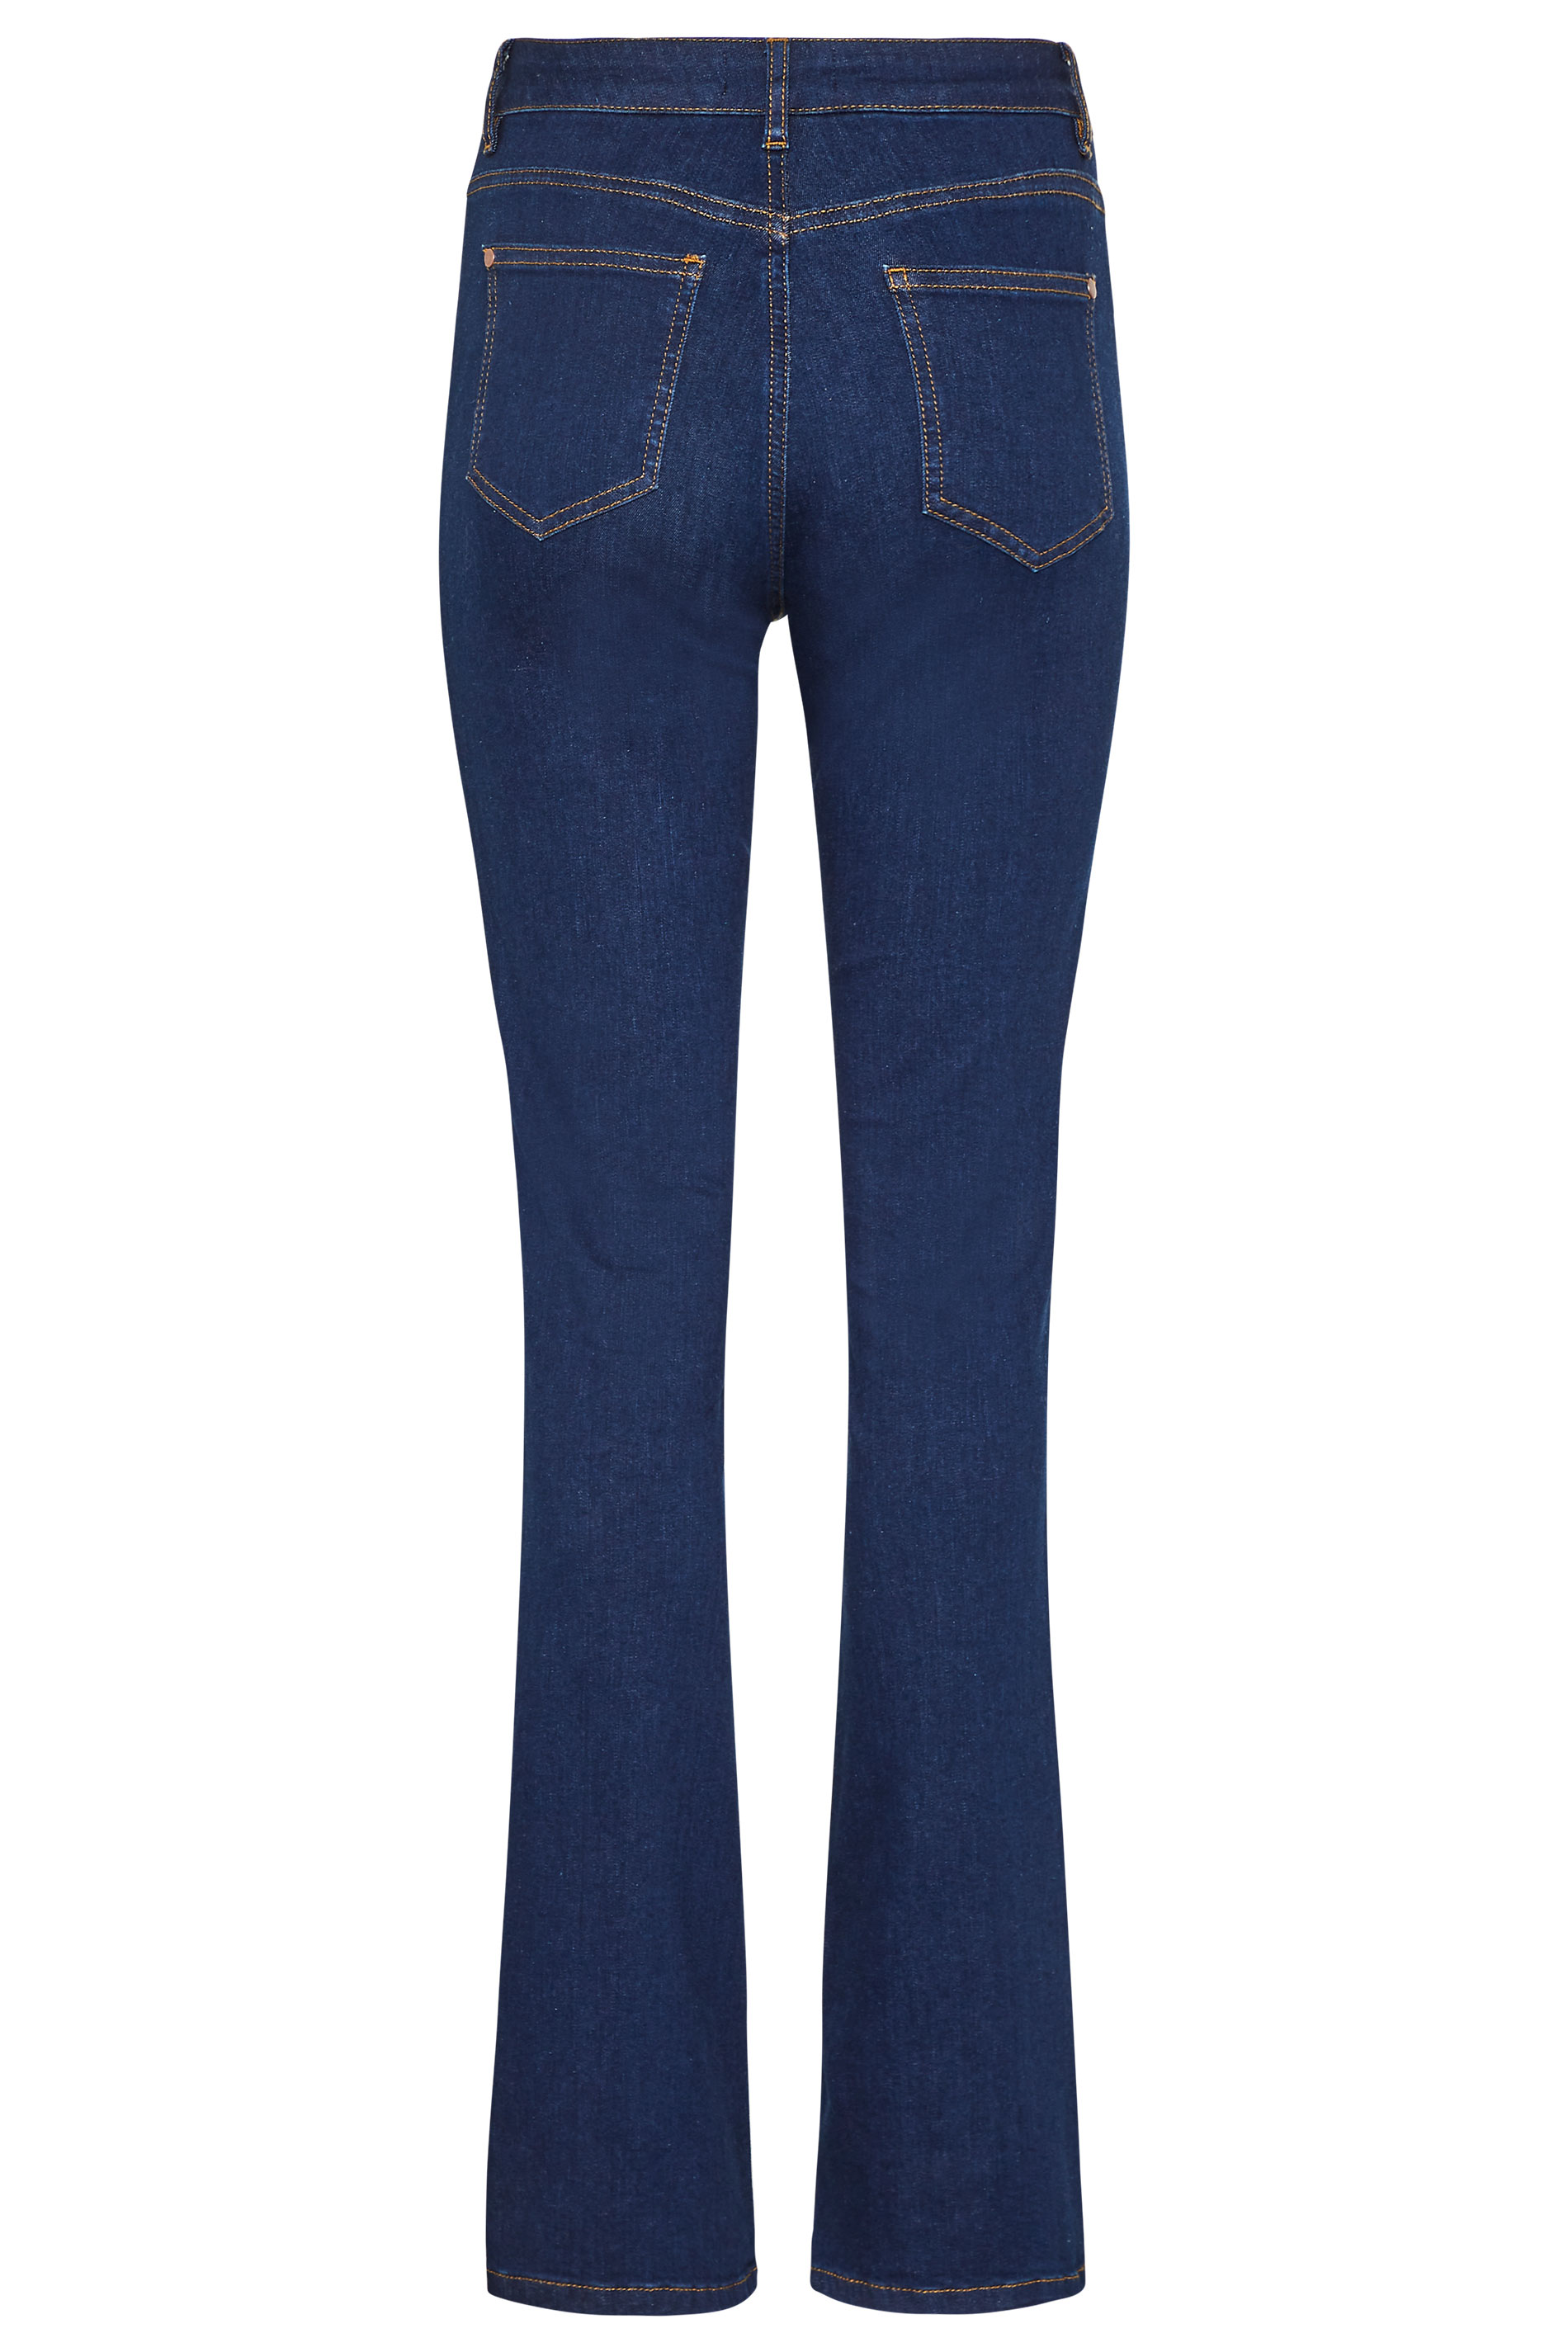 Deep Indigo Blue Ultra Stretch Bootcut Jeans | Long Tall Sally